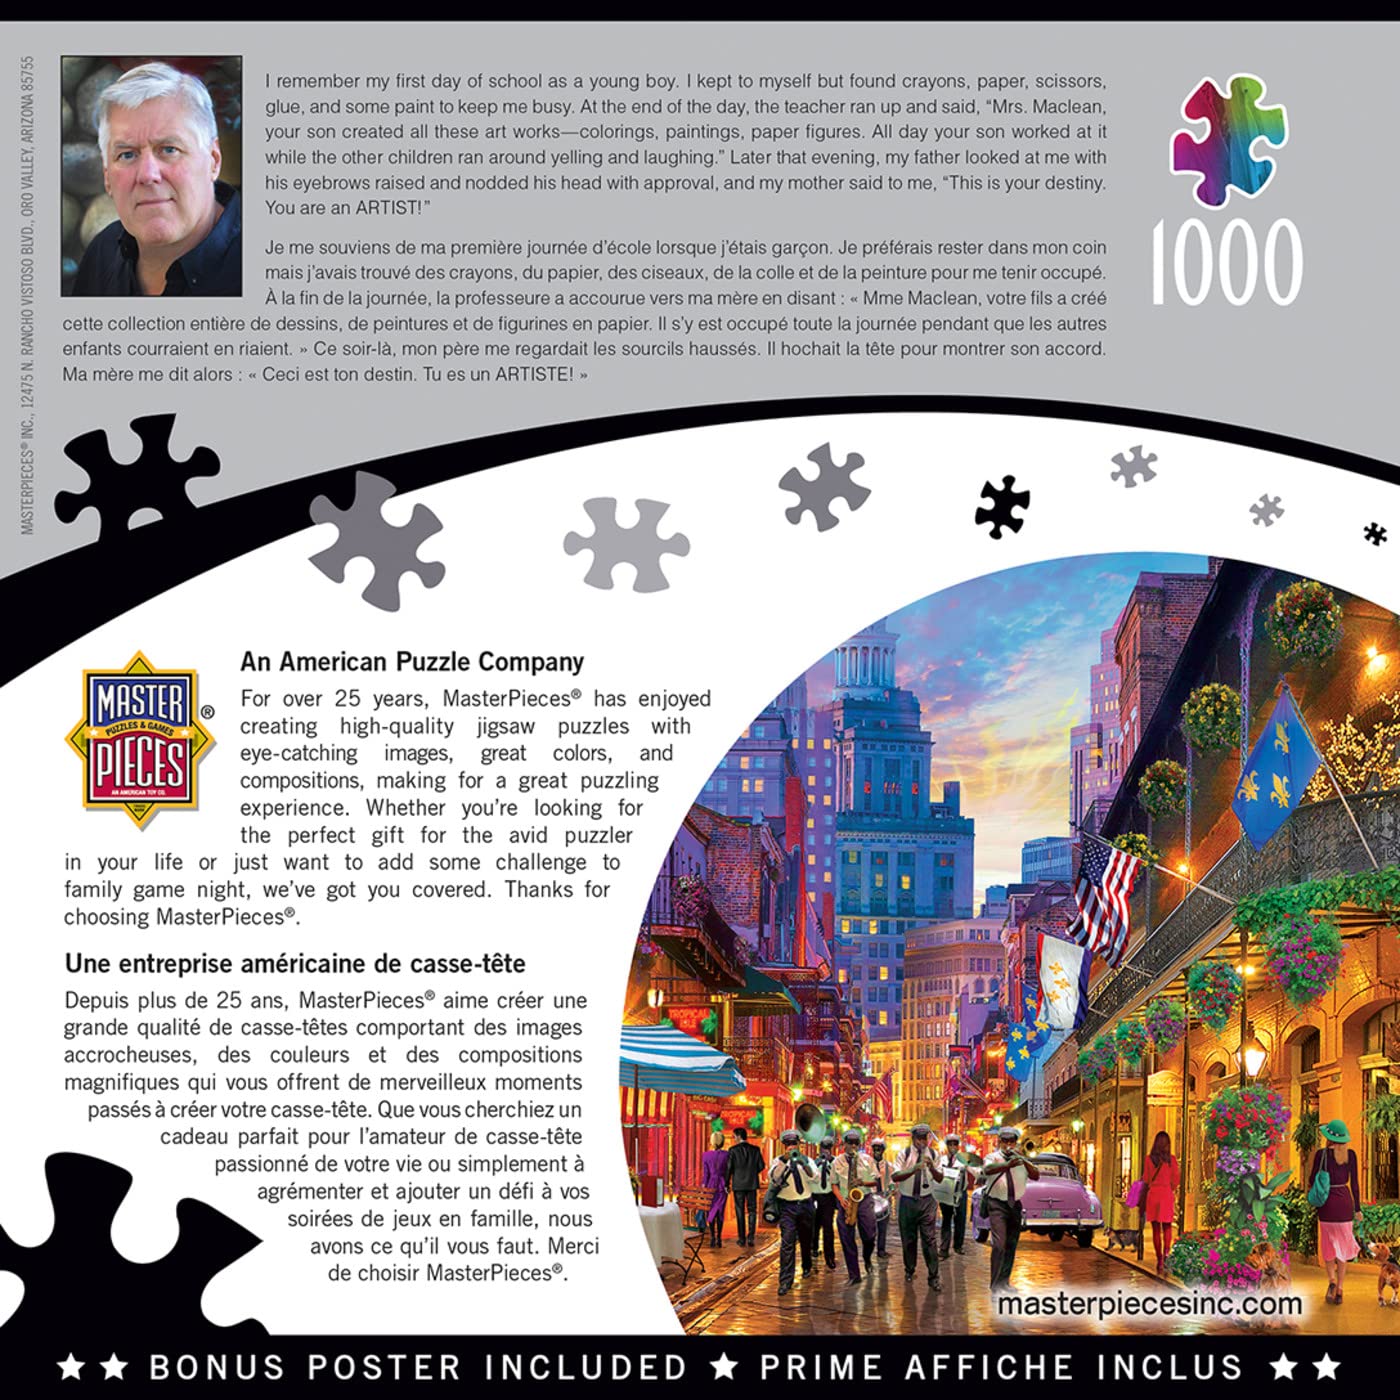 MasterPieces Colorscapes 1000 Puzzles Collection - 1000 Piece Jigsaw Puzzle